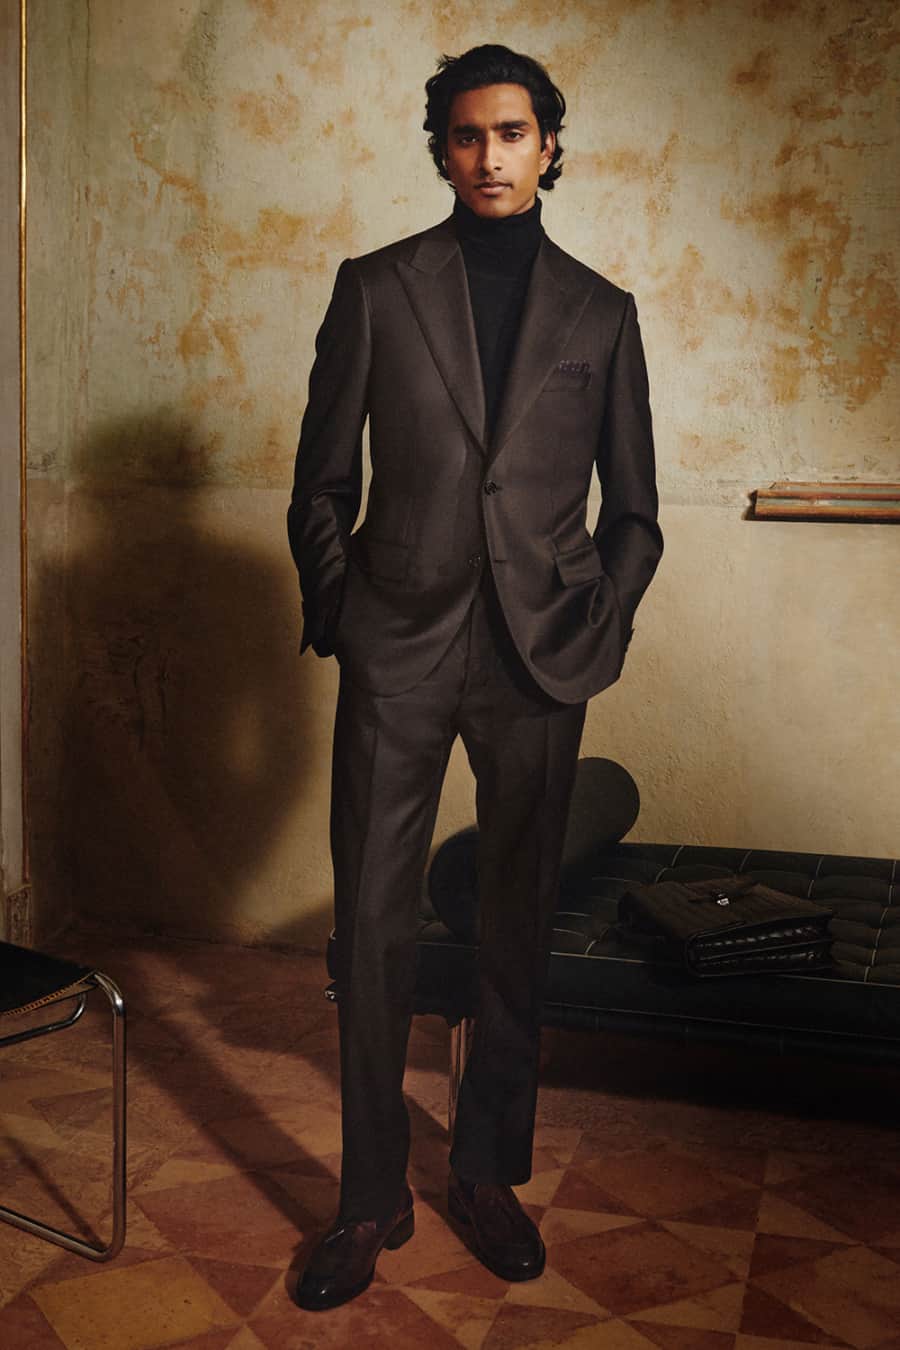 Men's cocktail attire suit worn with turtleneck outfit